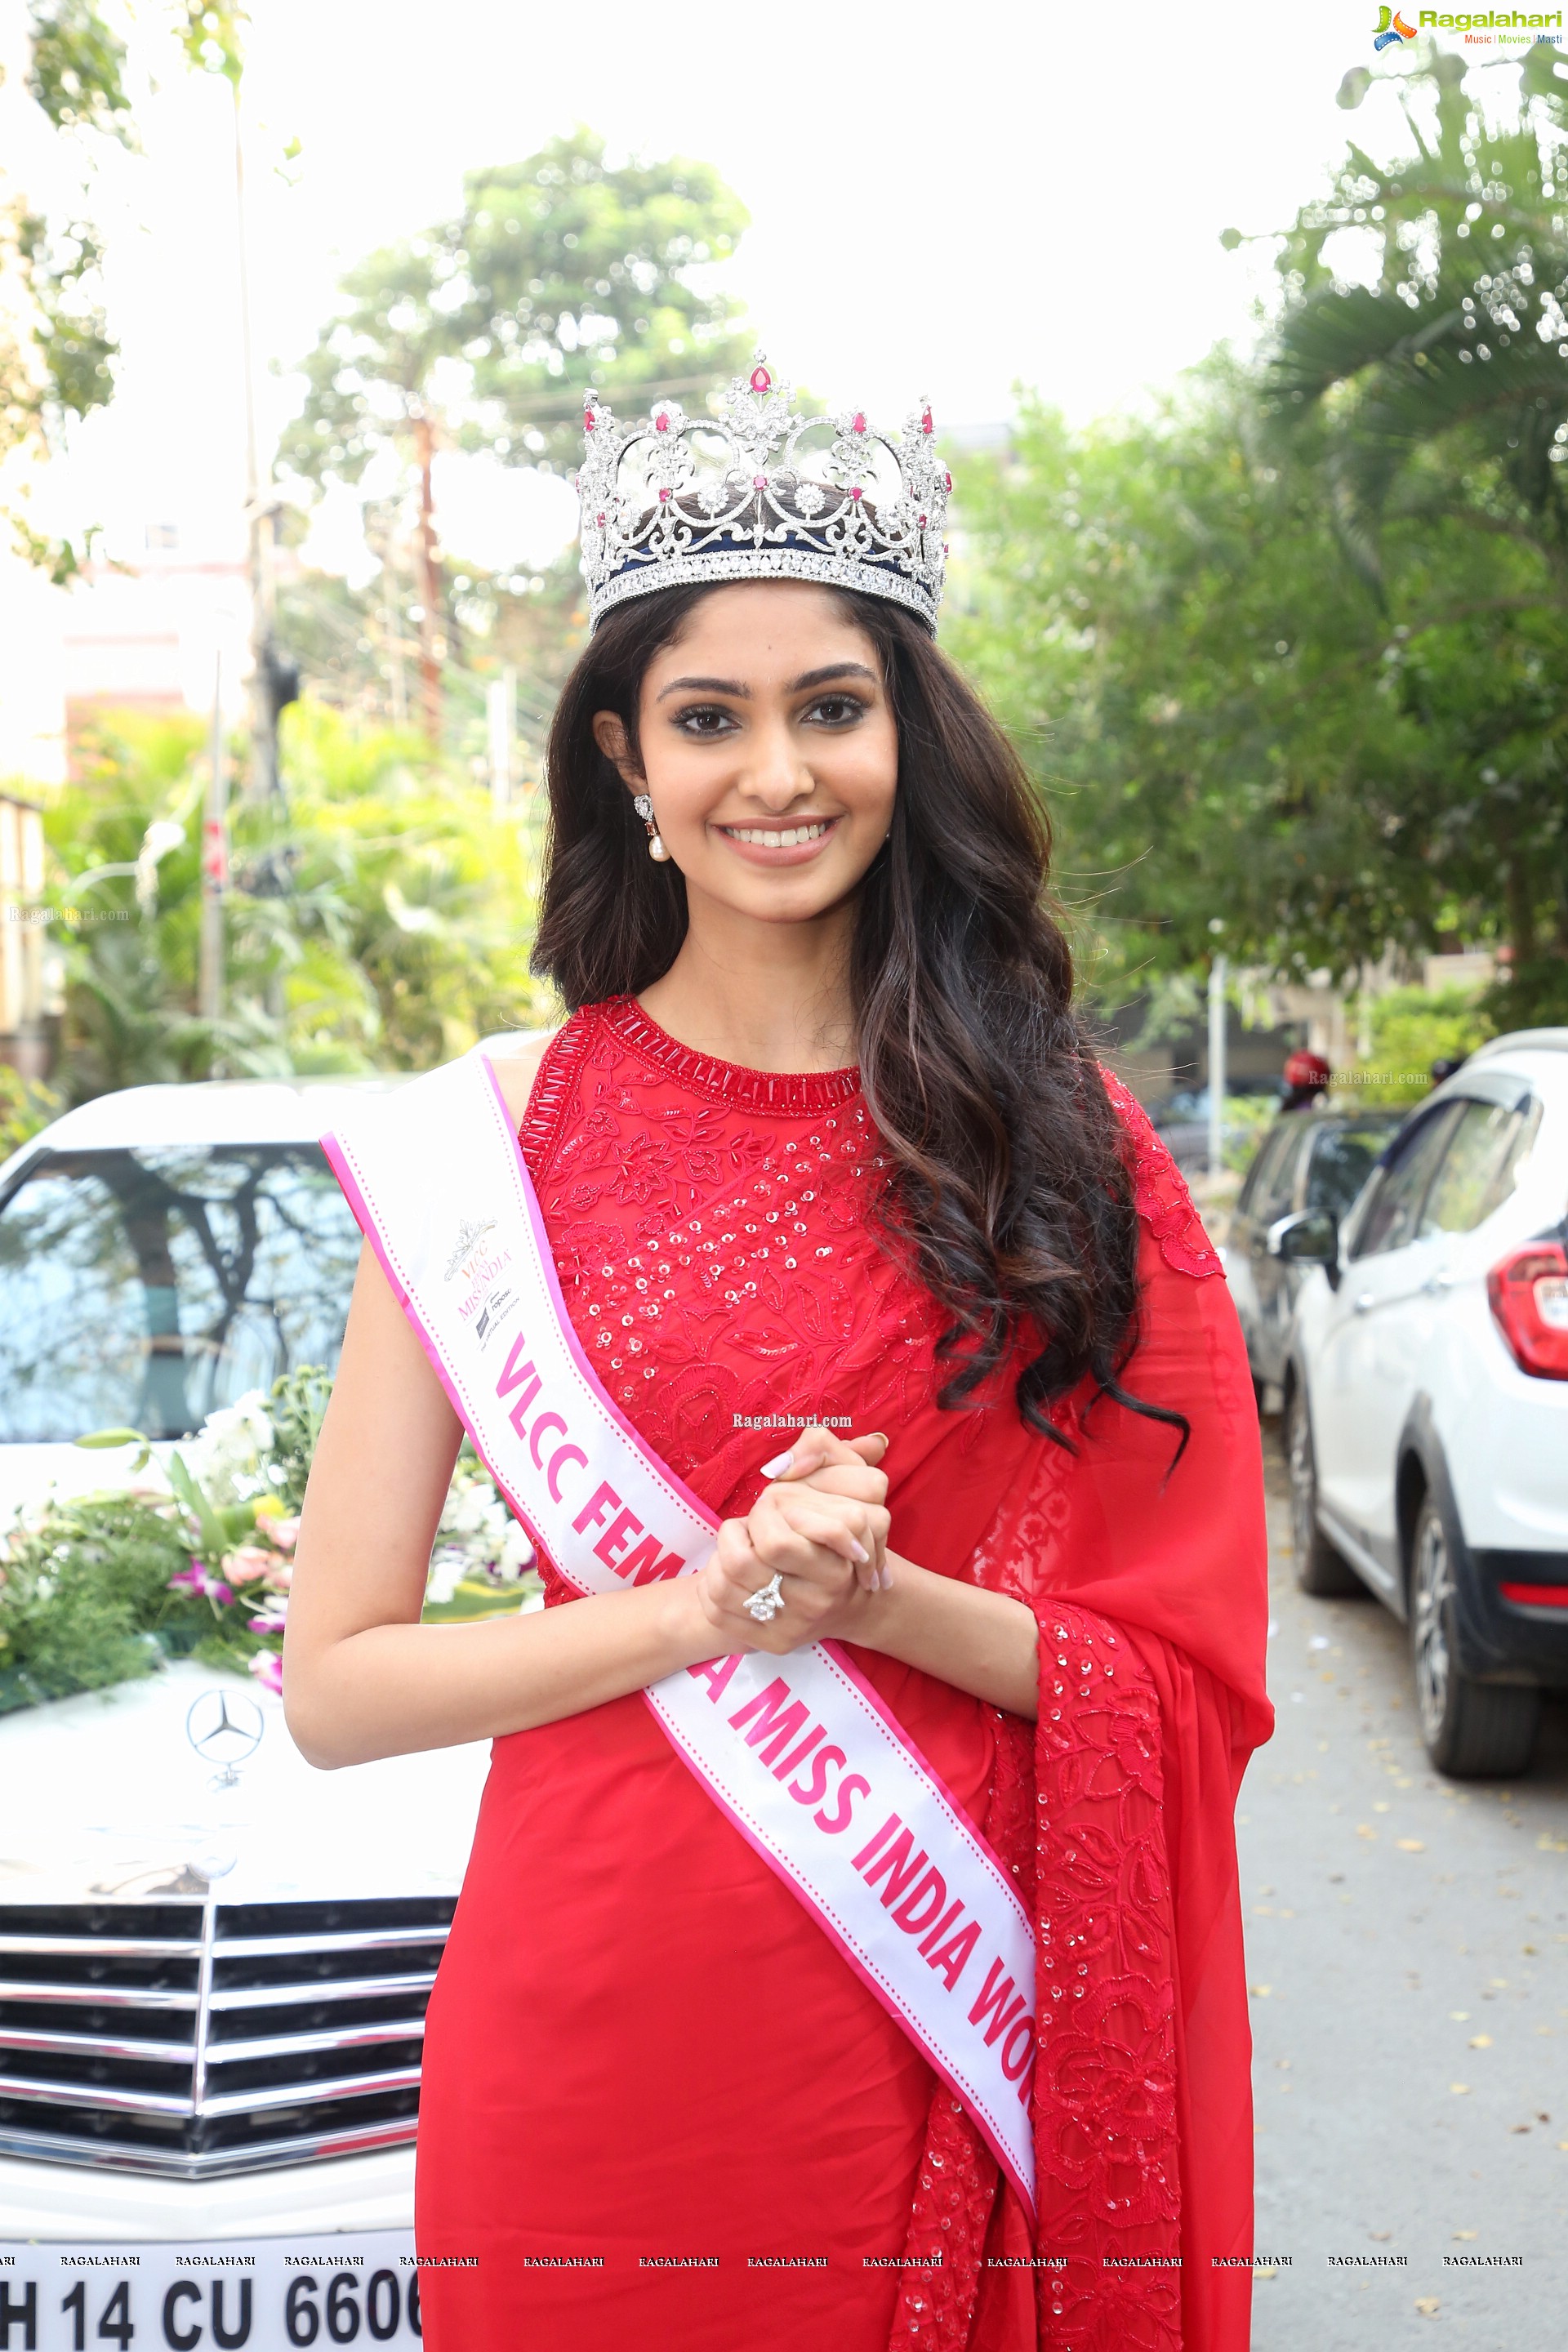 Femina Miss Miss India world 2020 Manasa Varanasi at Welcome Party at Home After Winning The Title